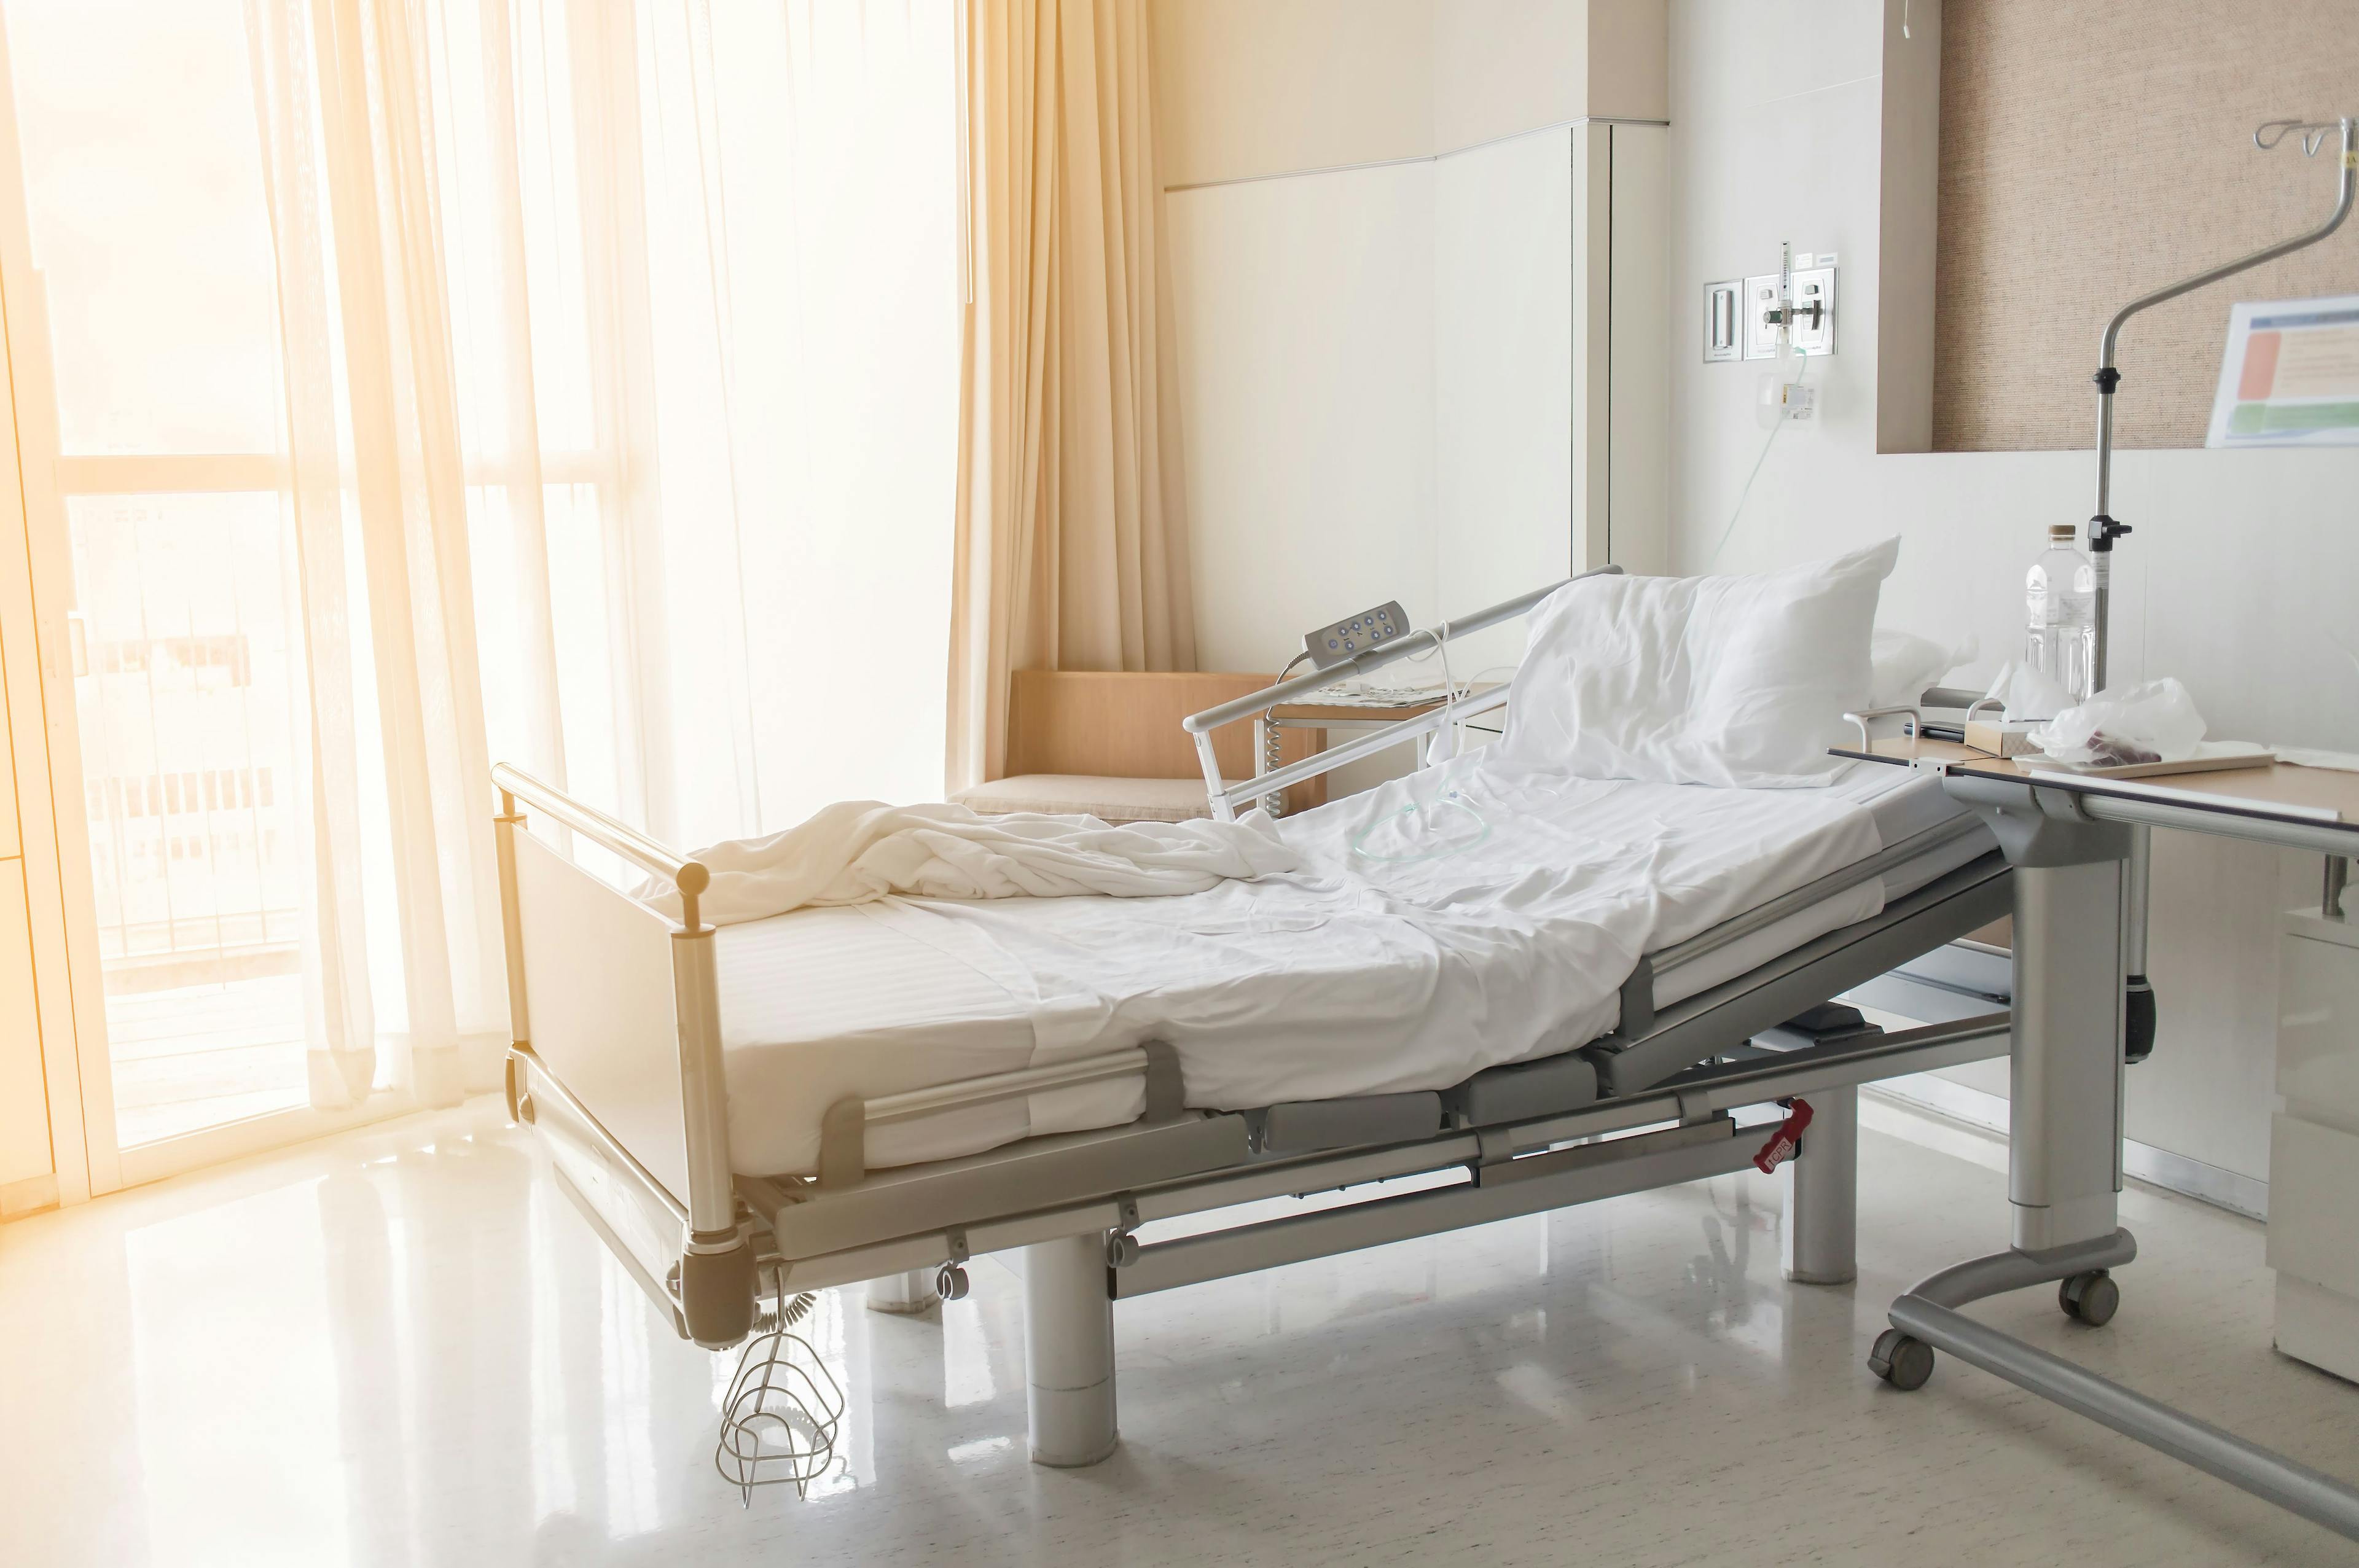 Hospital bed | Image credit: catinsyrup - stock.adobe.com